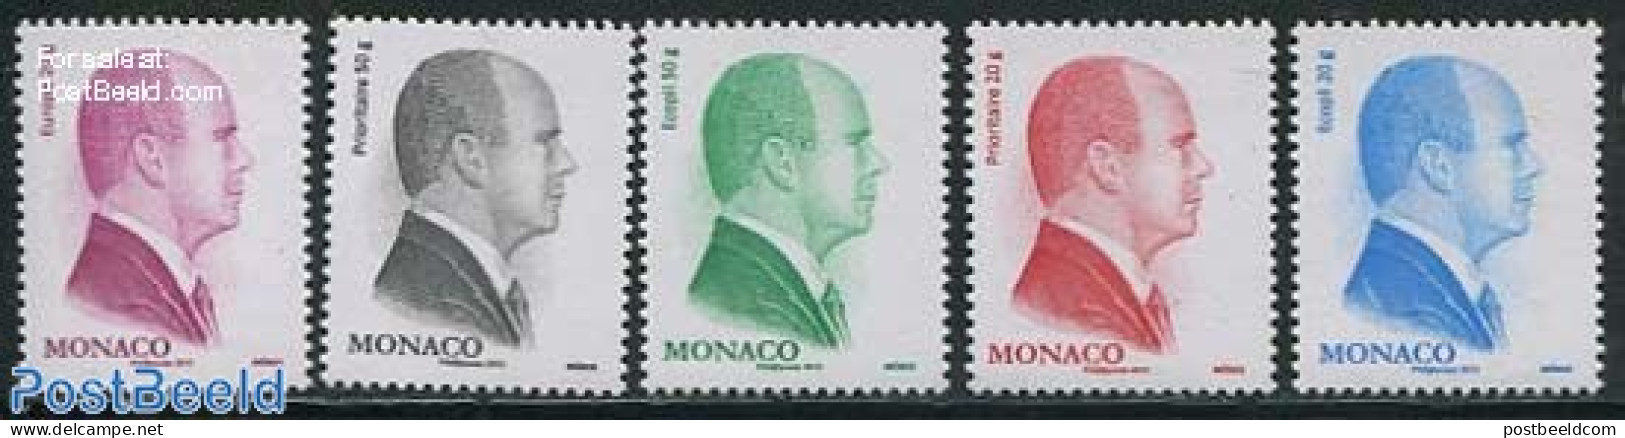 Monaco 2012 Definitives, Albert II 5v, Mint NH - Nuevos